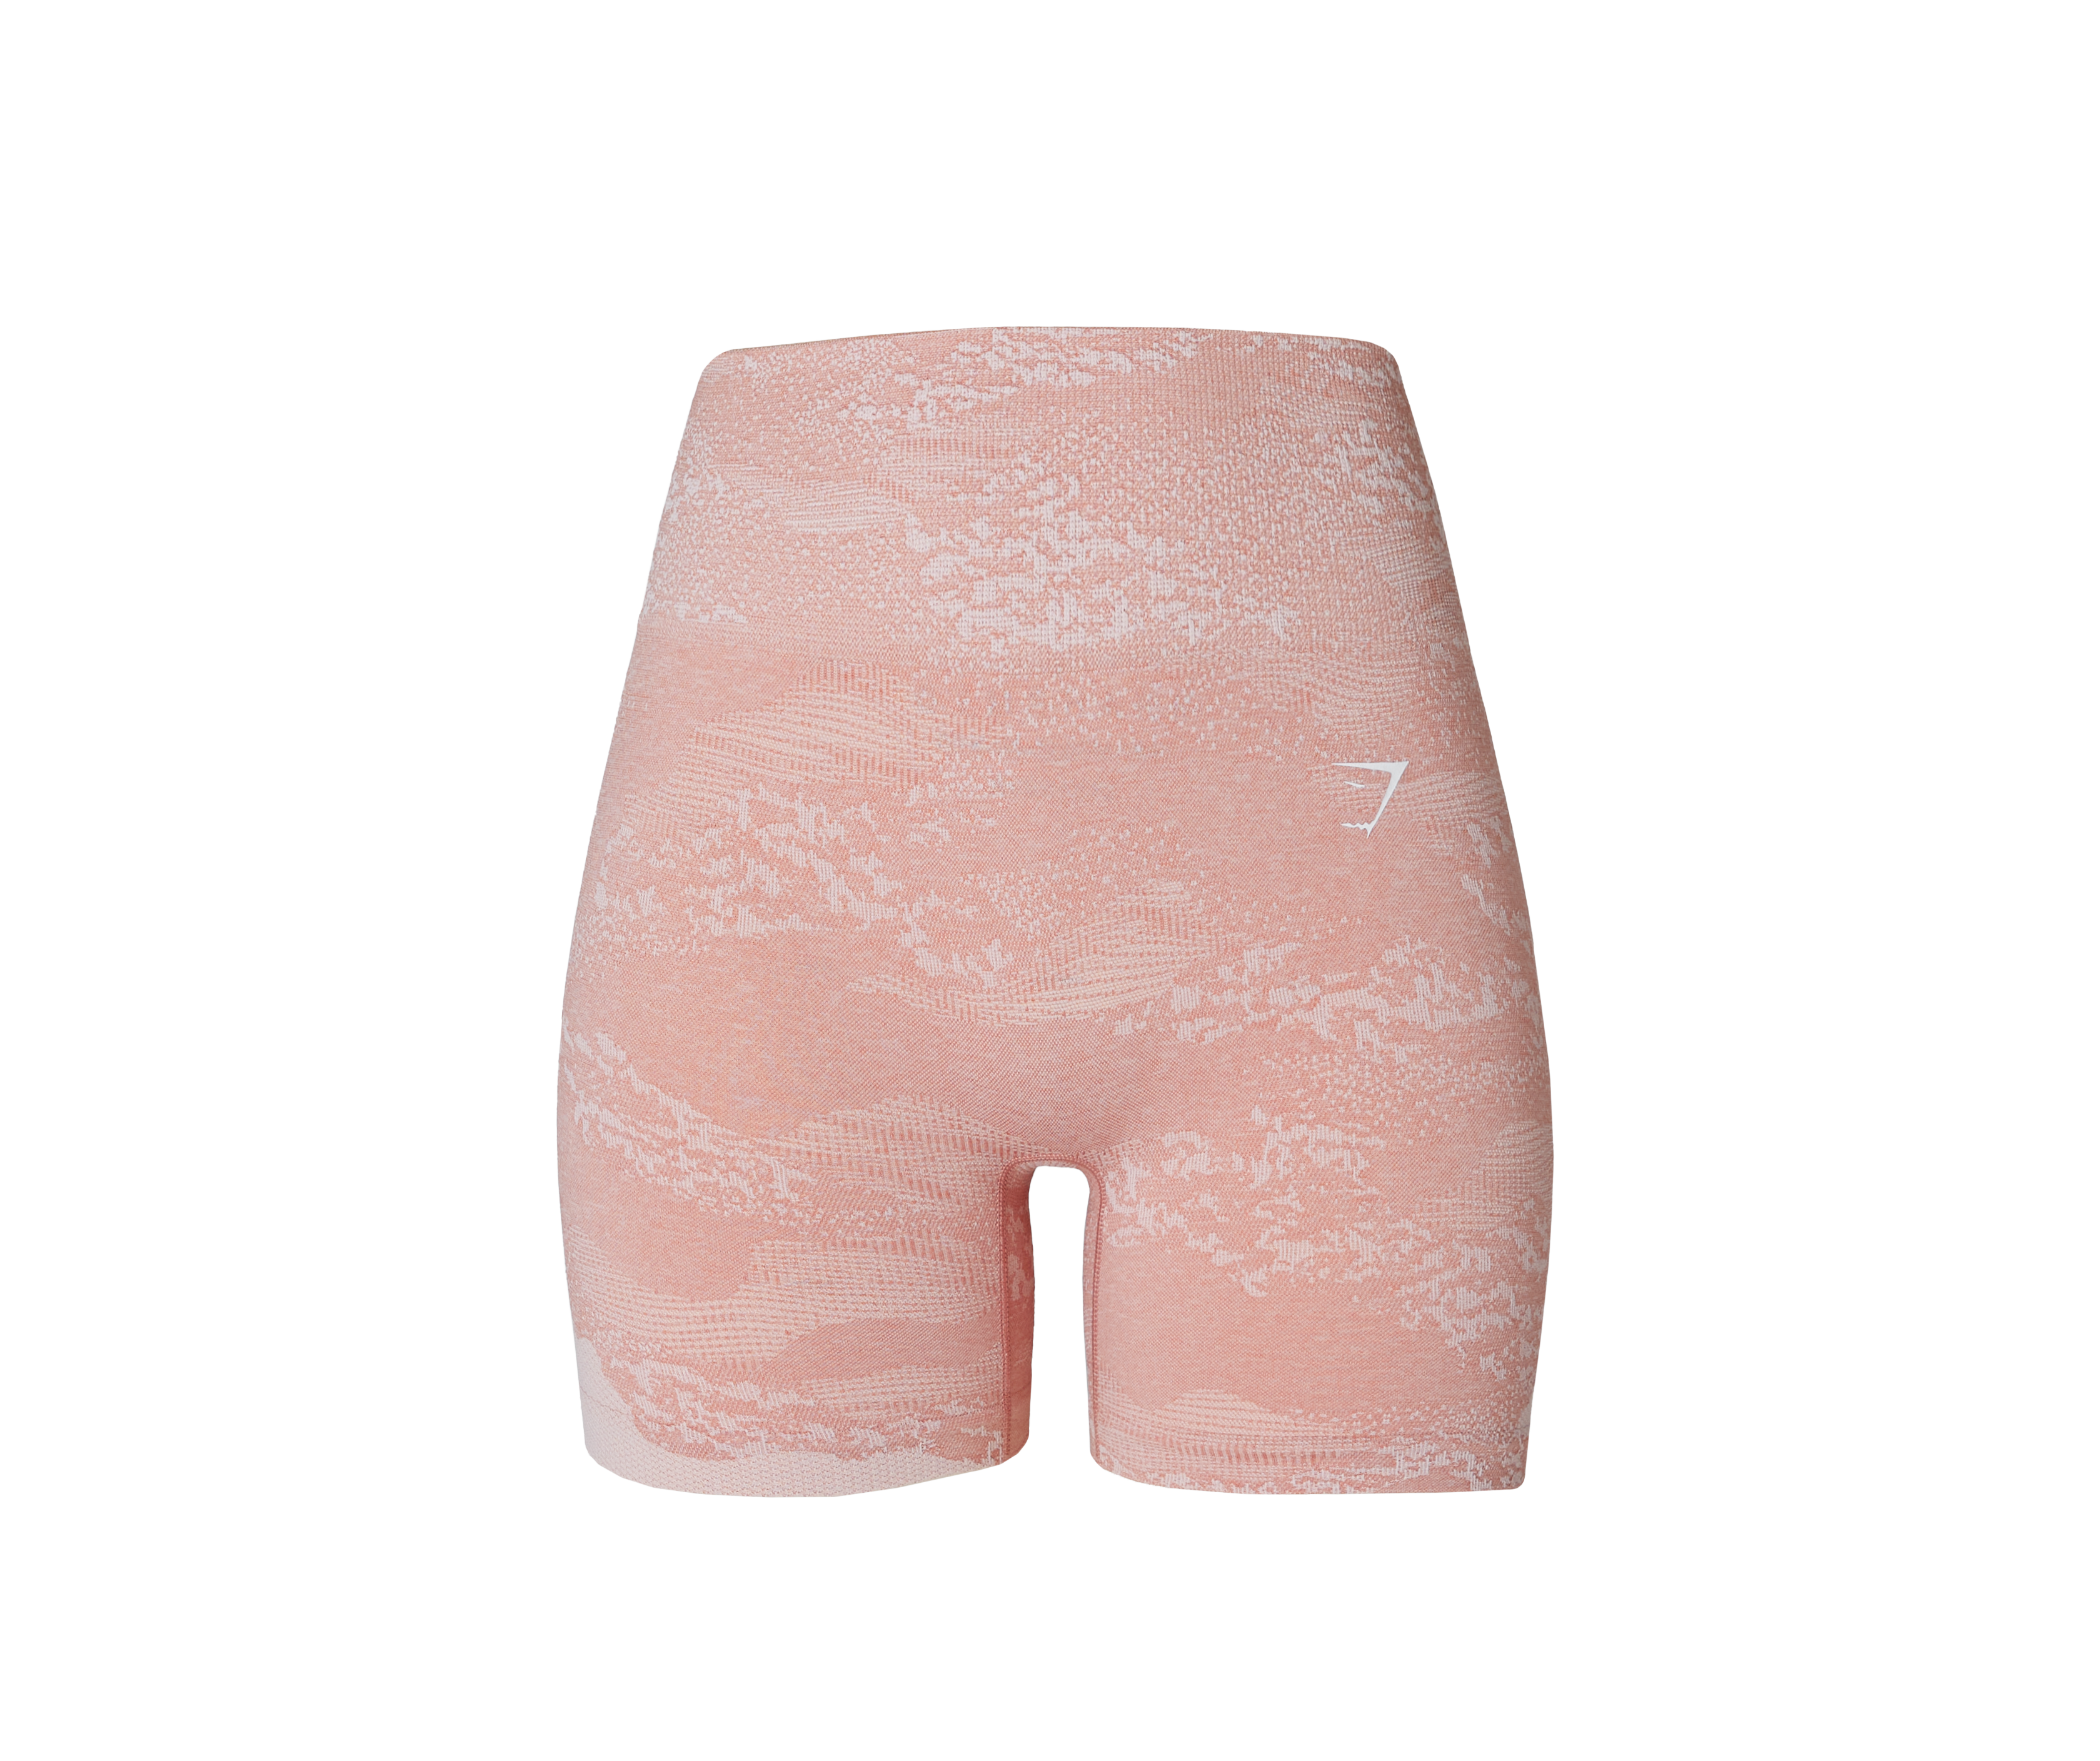 Gymshark Vital Seamless 2.0 Shorts - Plum Pink Marl